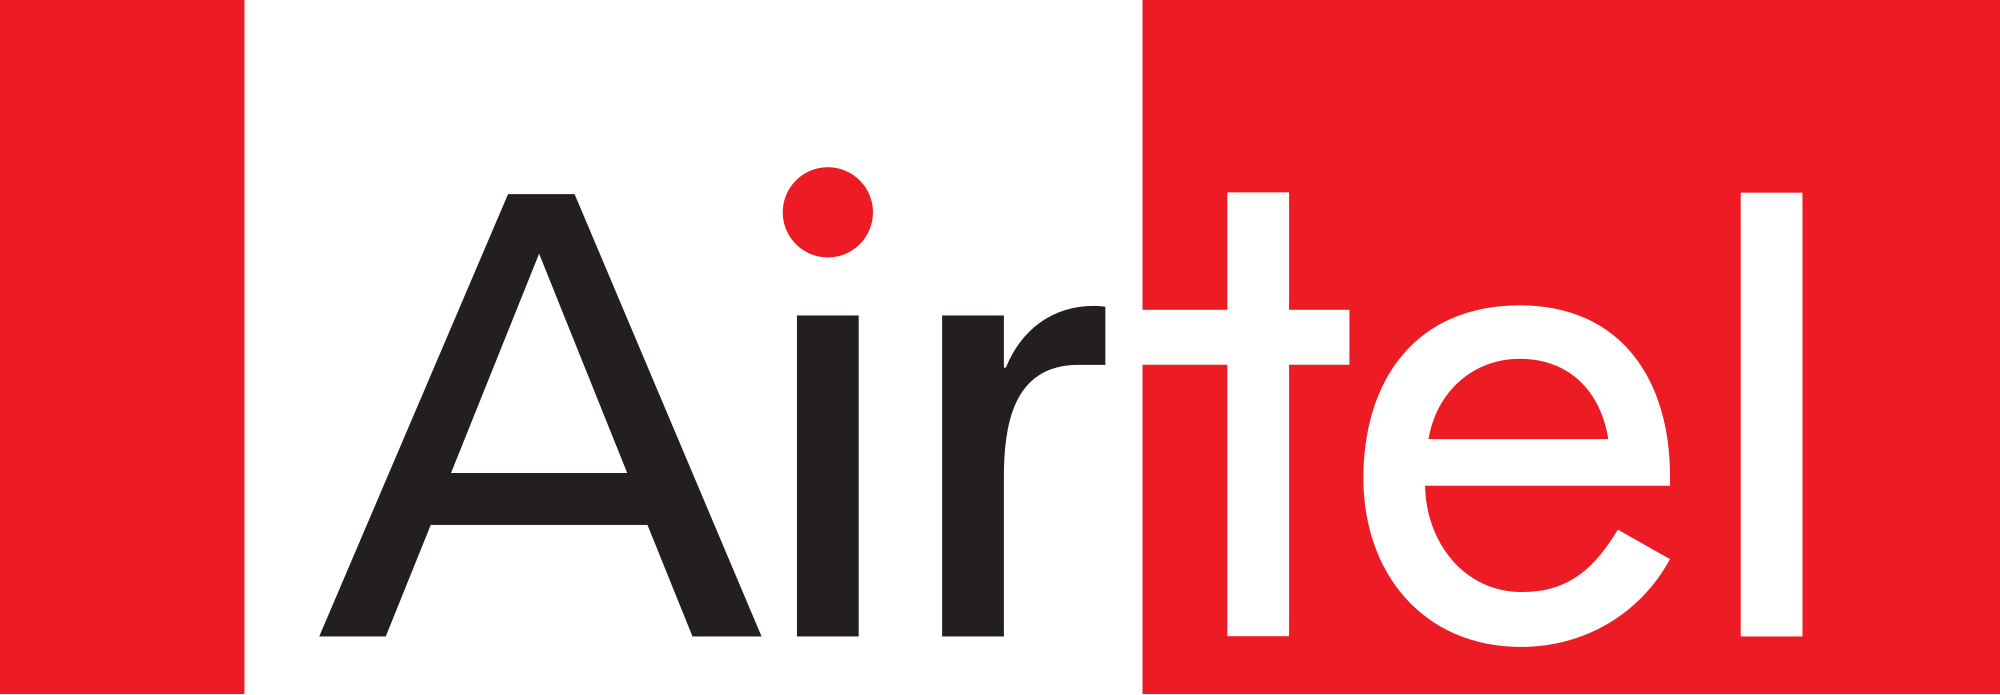 Artil Logo - Airtel Logo PNG Transparent Airtel Logo.PNG Images. | PlusPNG